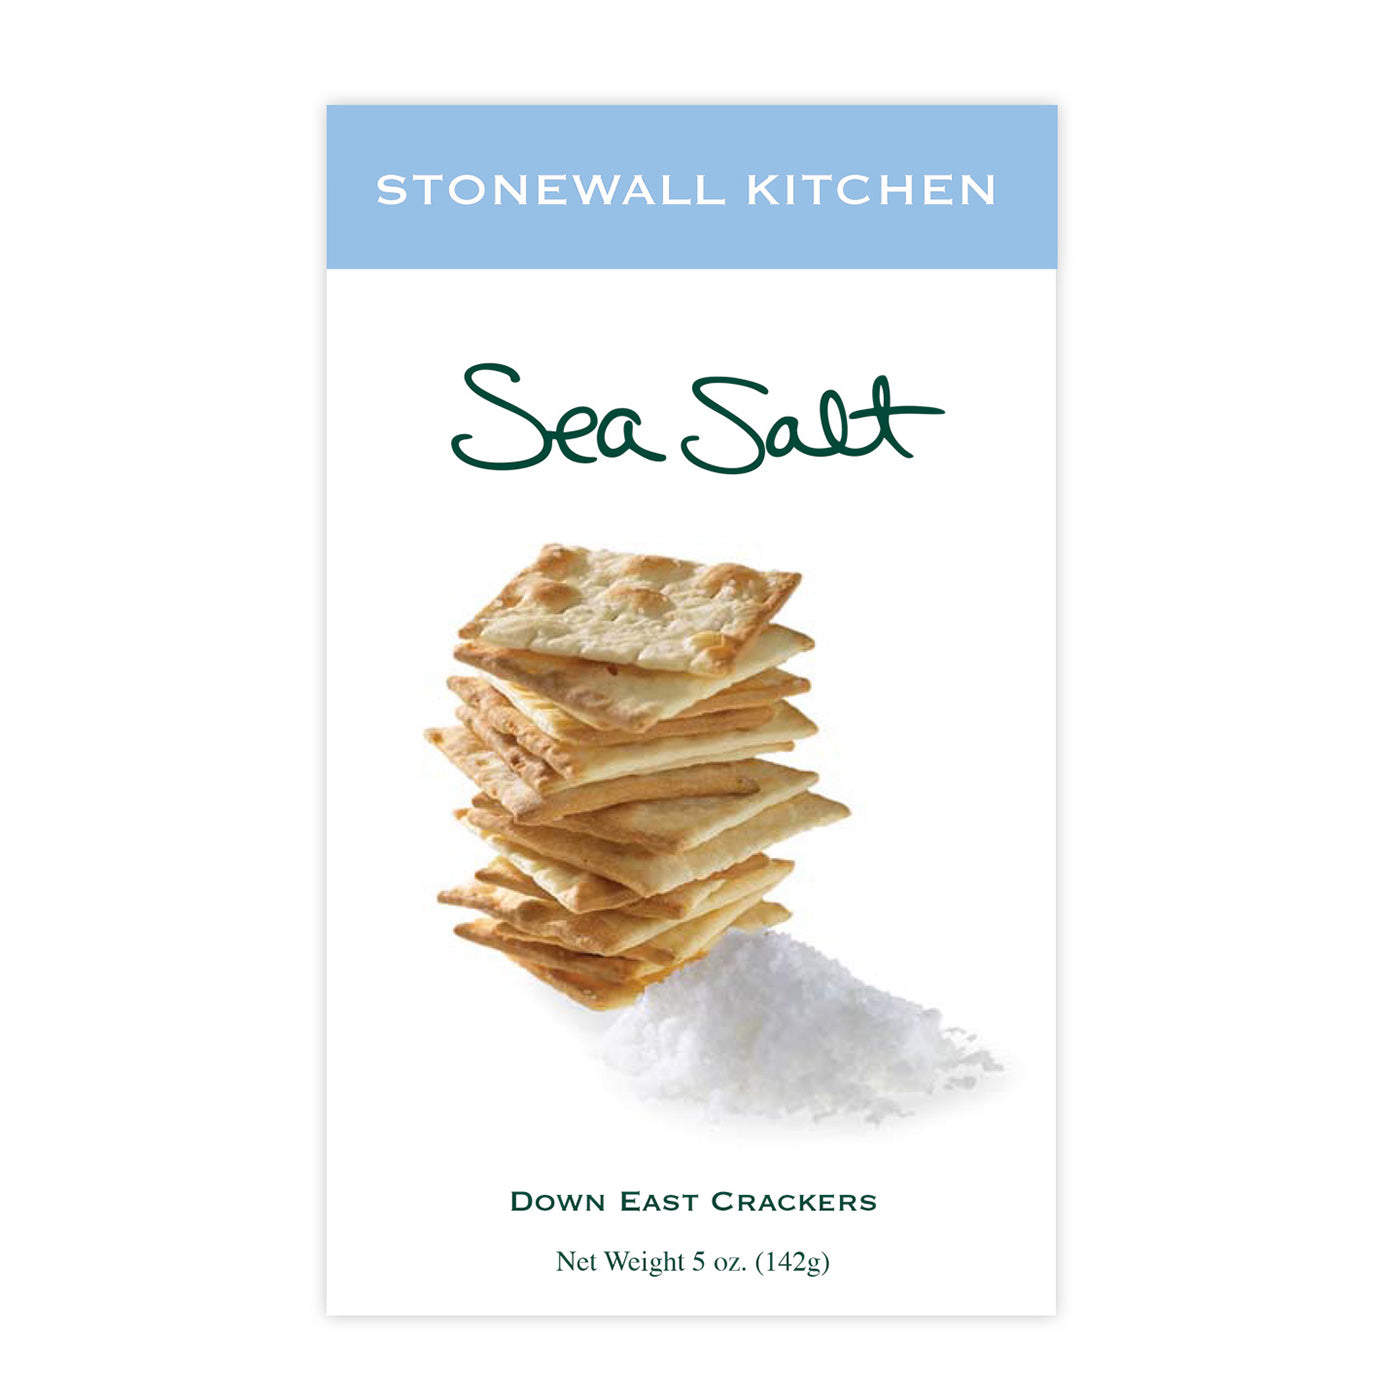 Stonewall Kitchen Sea Salt Down East Crackers 5 oz.